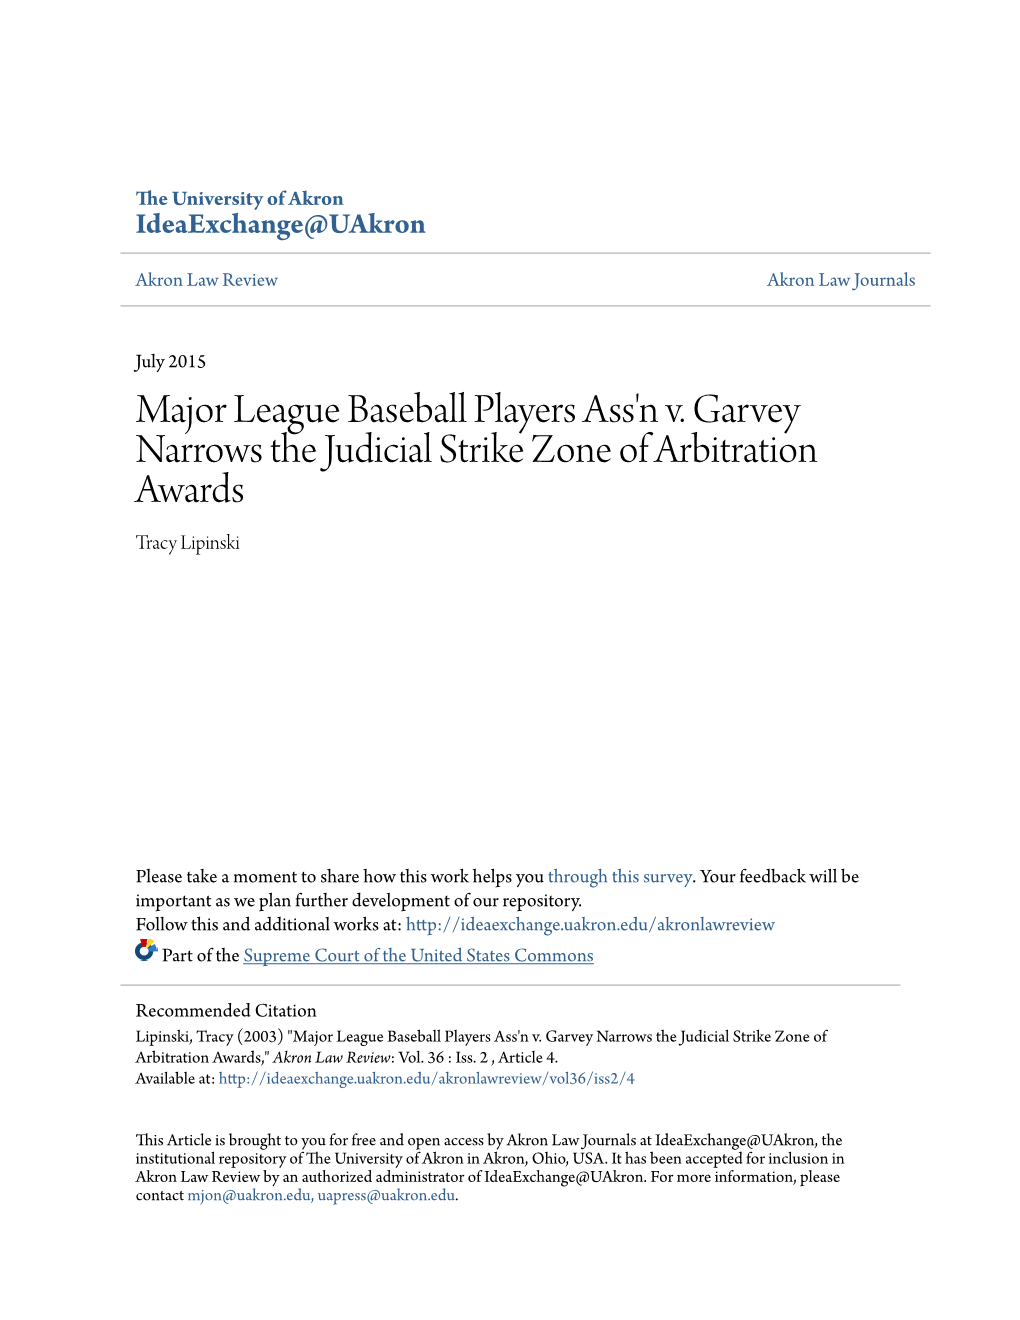 Major League Baseball Players Ass'n V. Garvey Narrows the Judicial Strike Zone of Arbitration Awards Tracy Lipinski